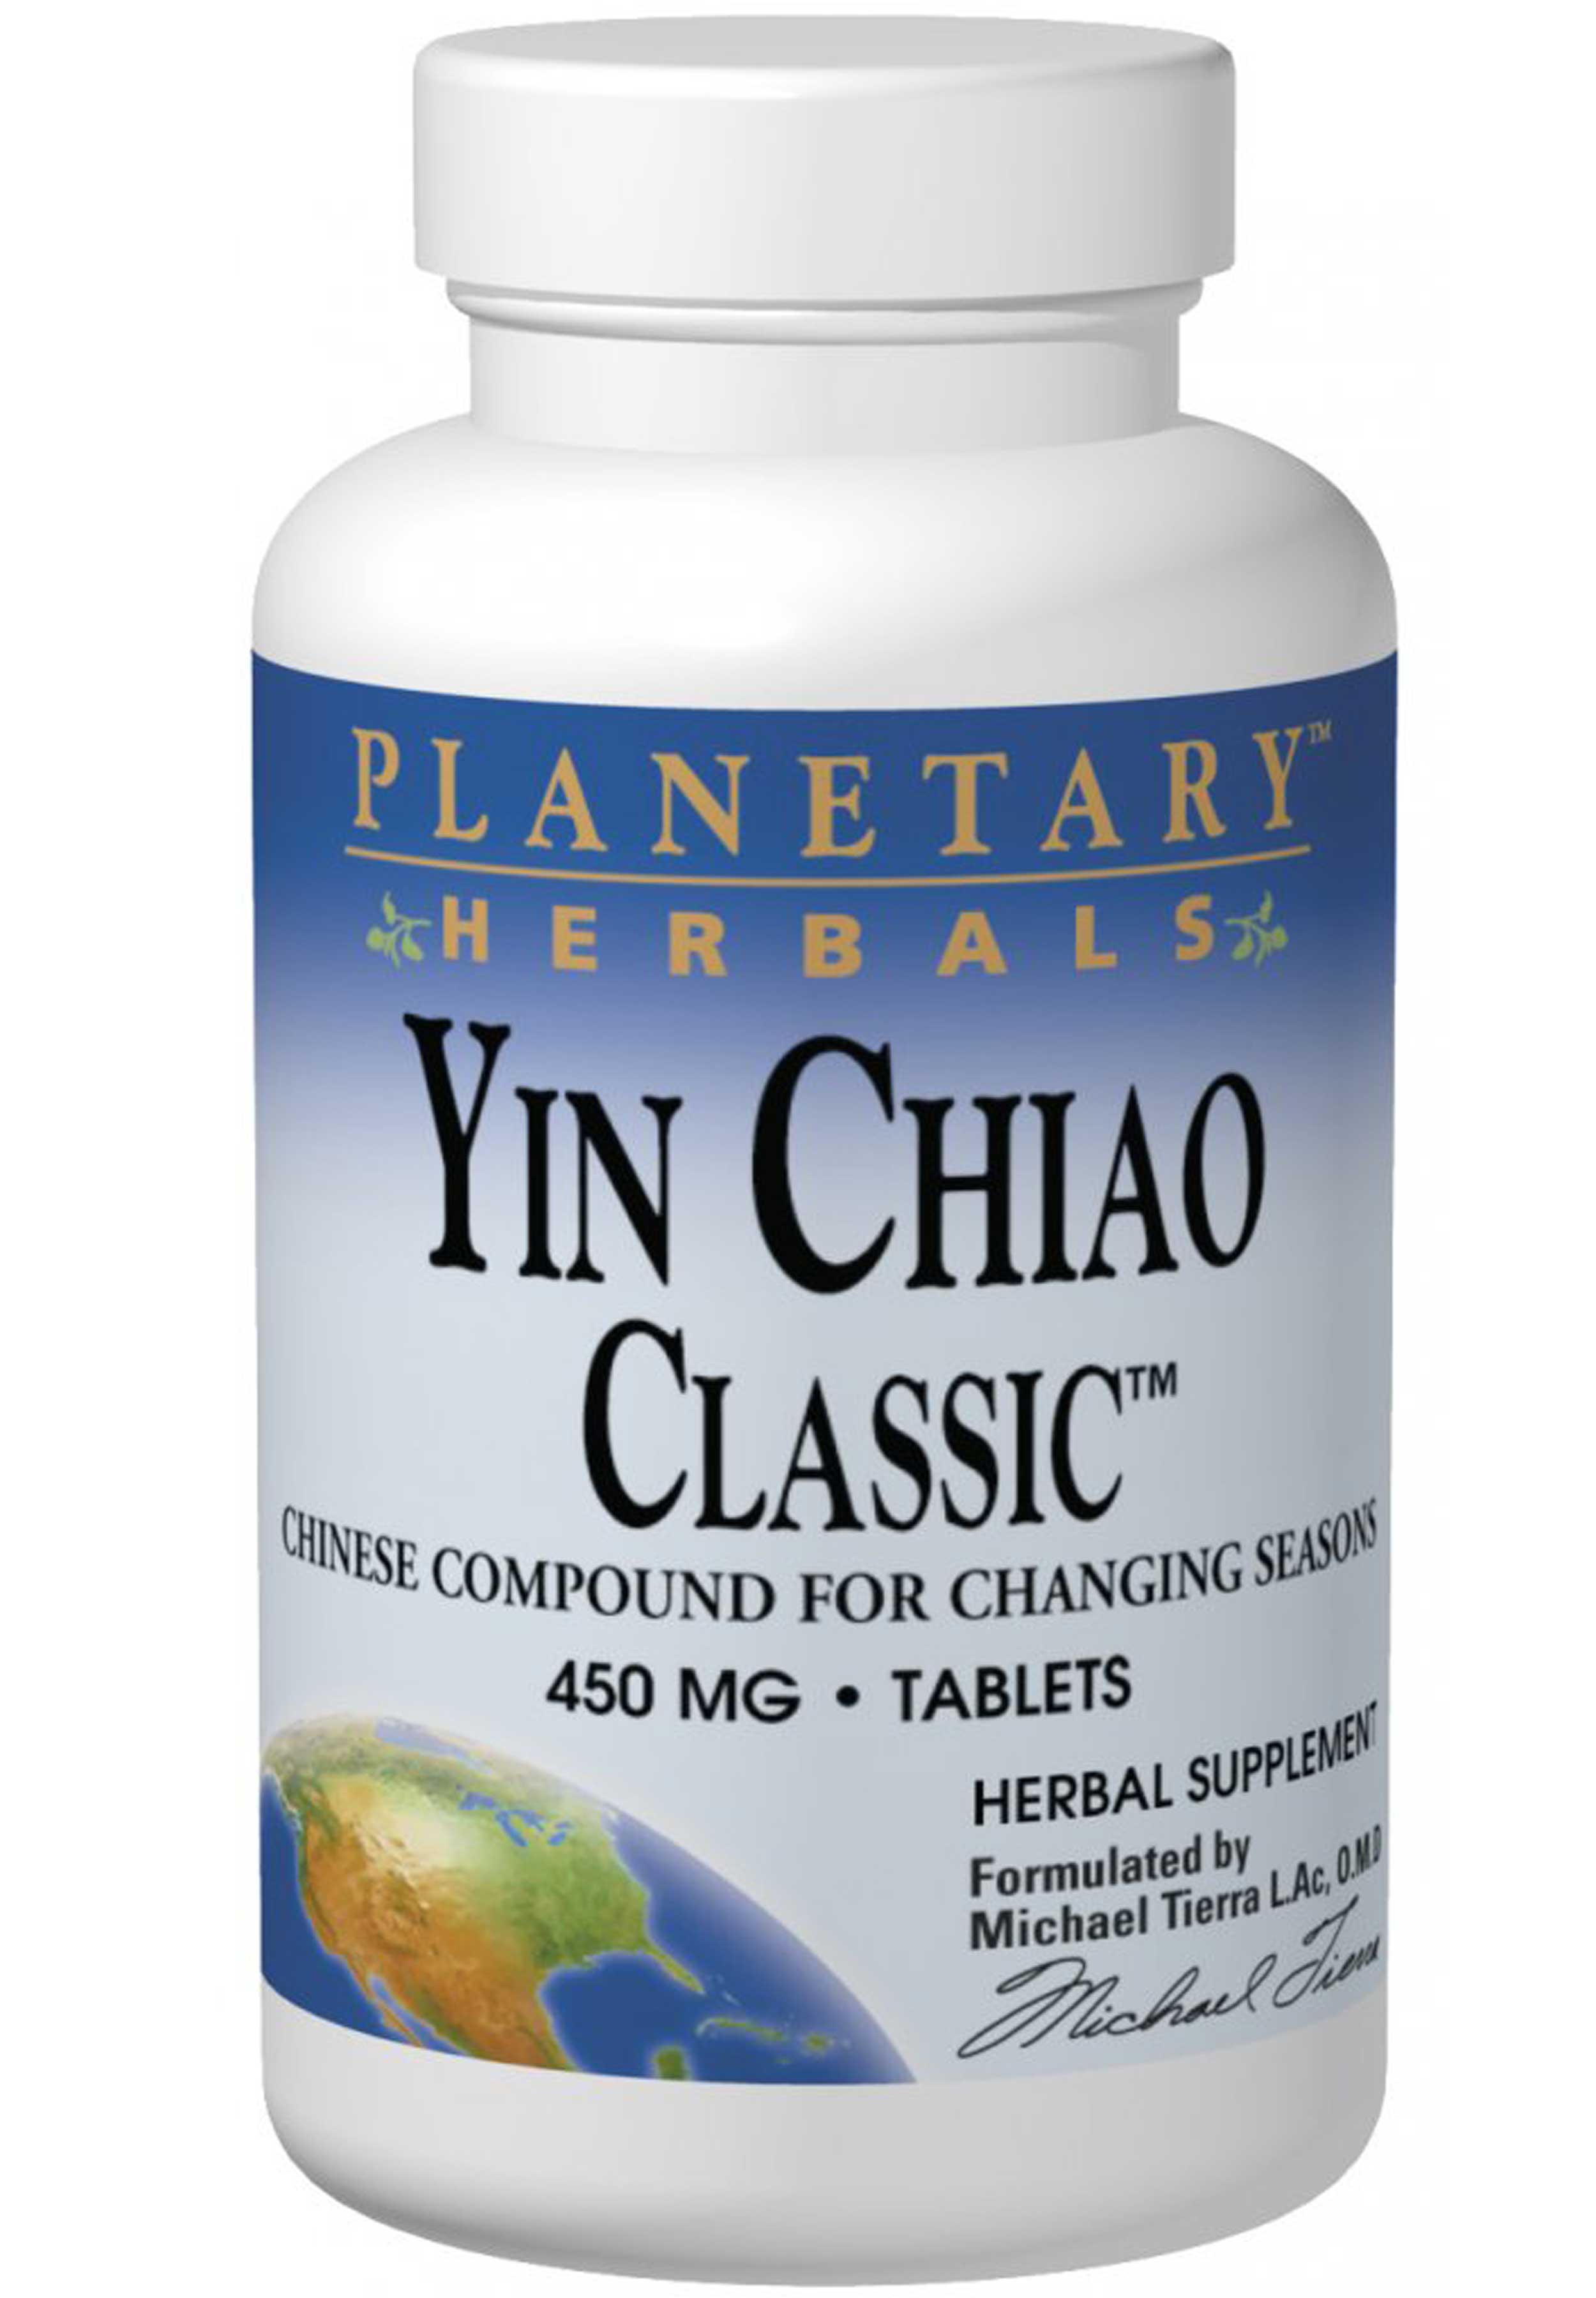 Planetary Herbals Yin Chiao Classic™